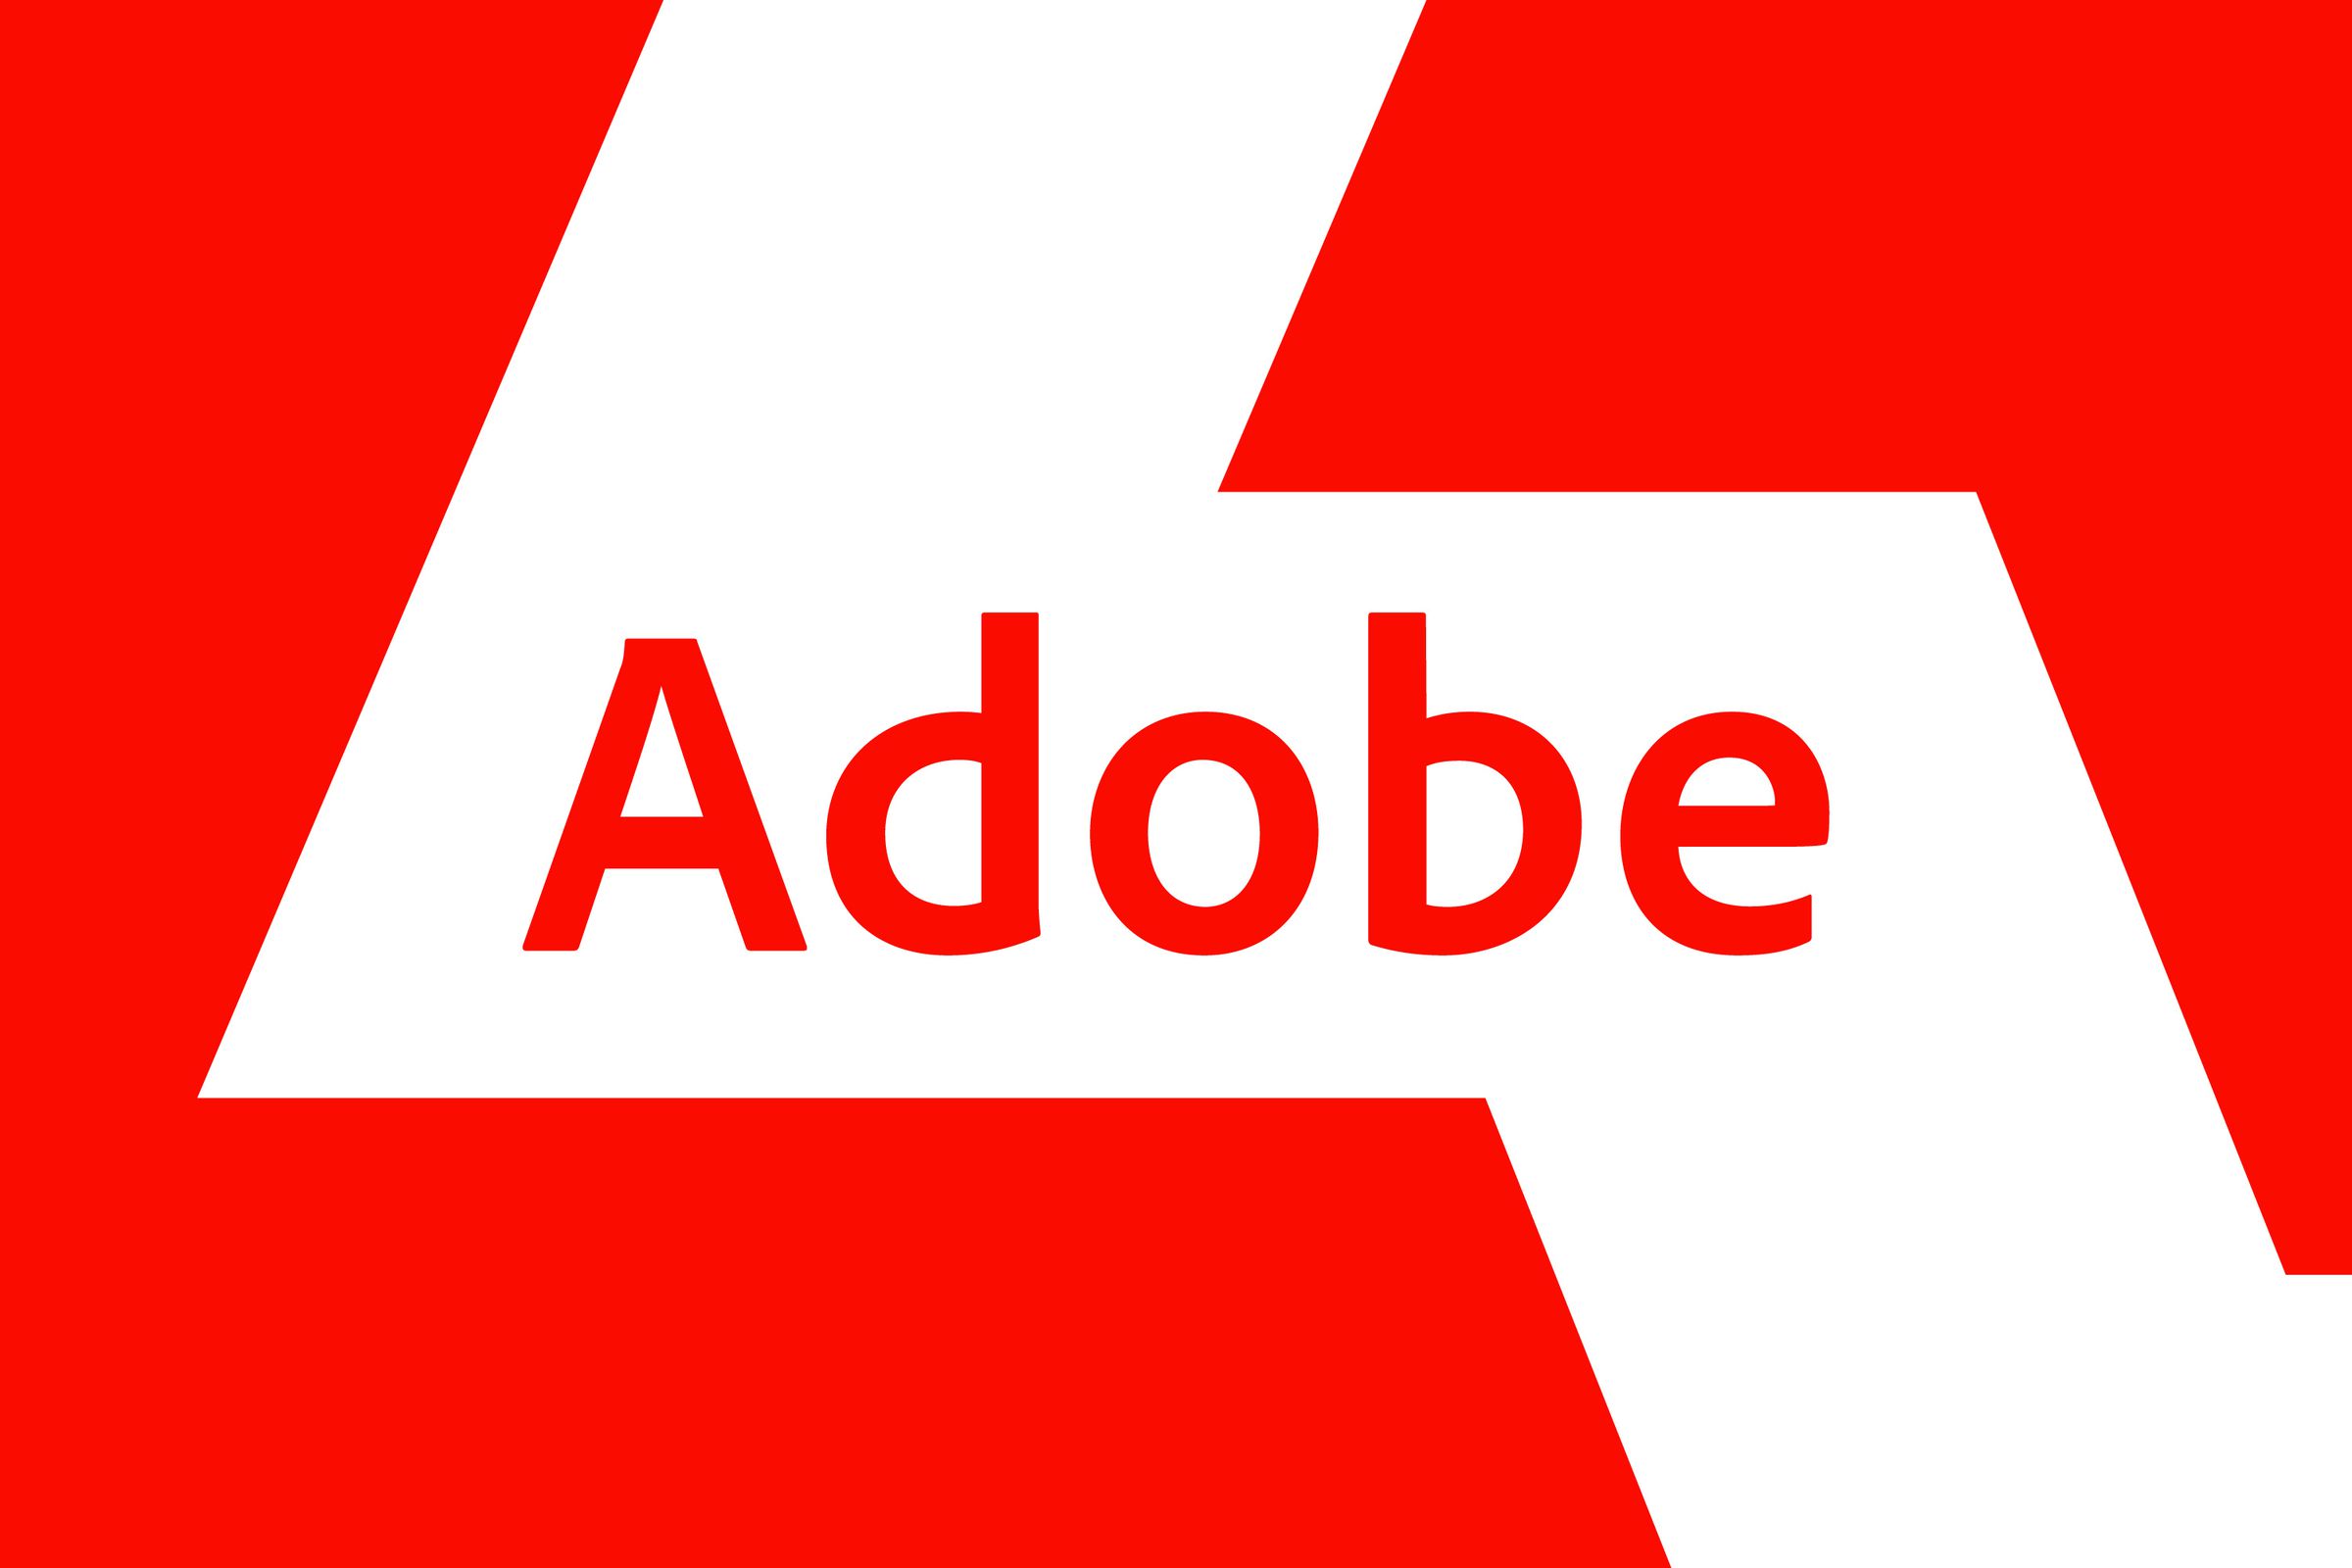 Red artwork of the Adobe brand logo